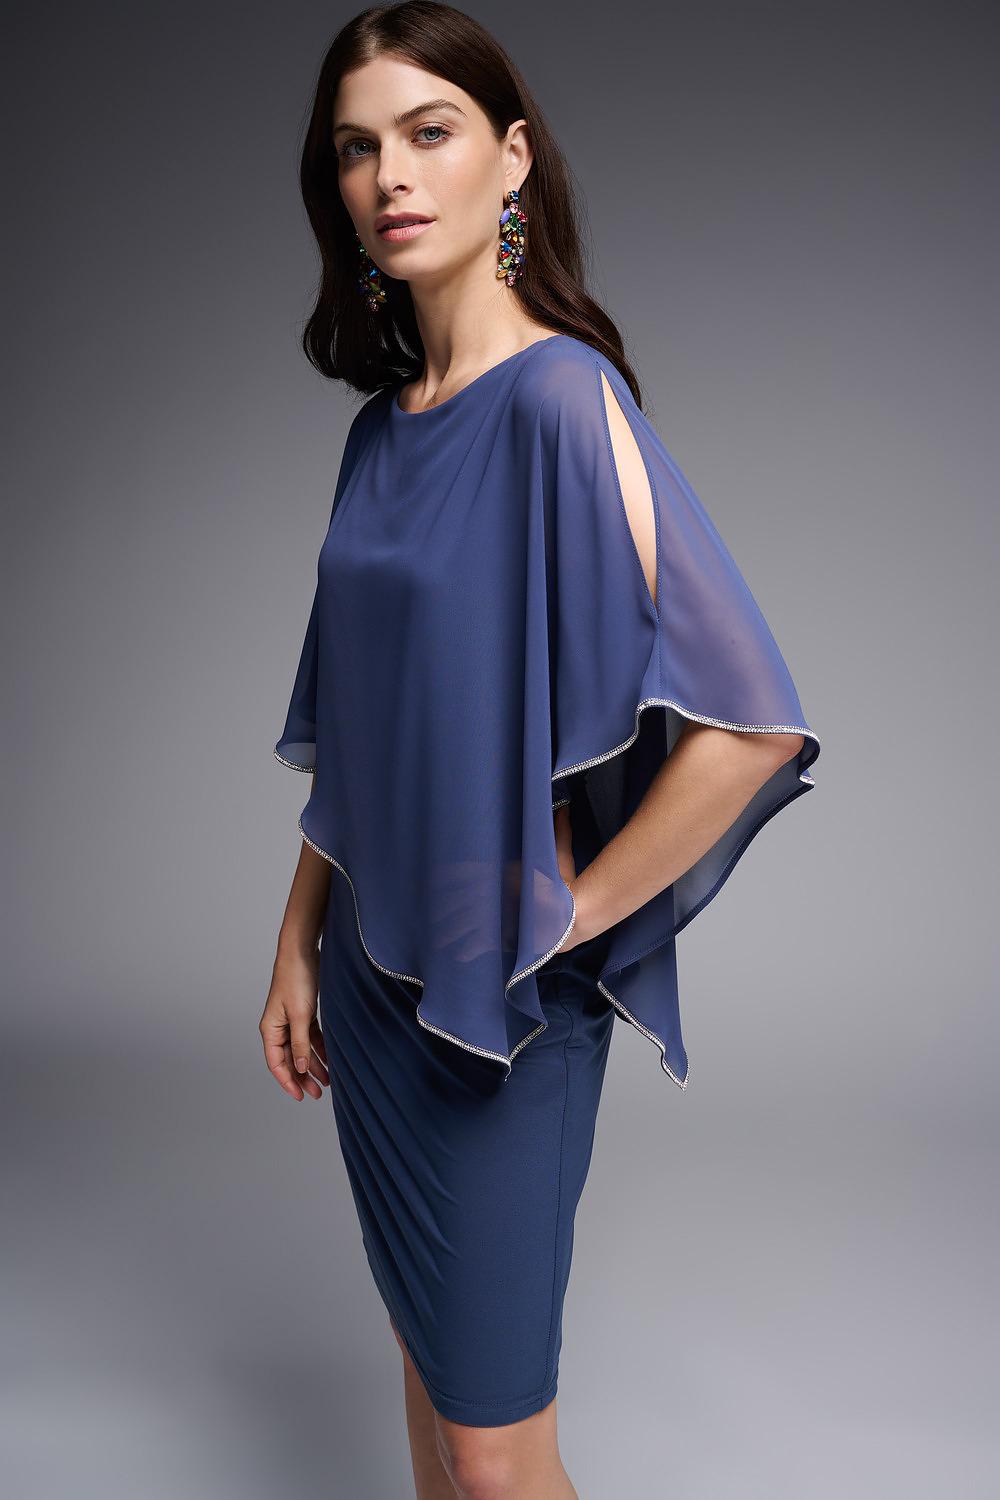 Dress with Asymmetric Hem Style 223762. Mineral Blue